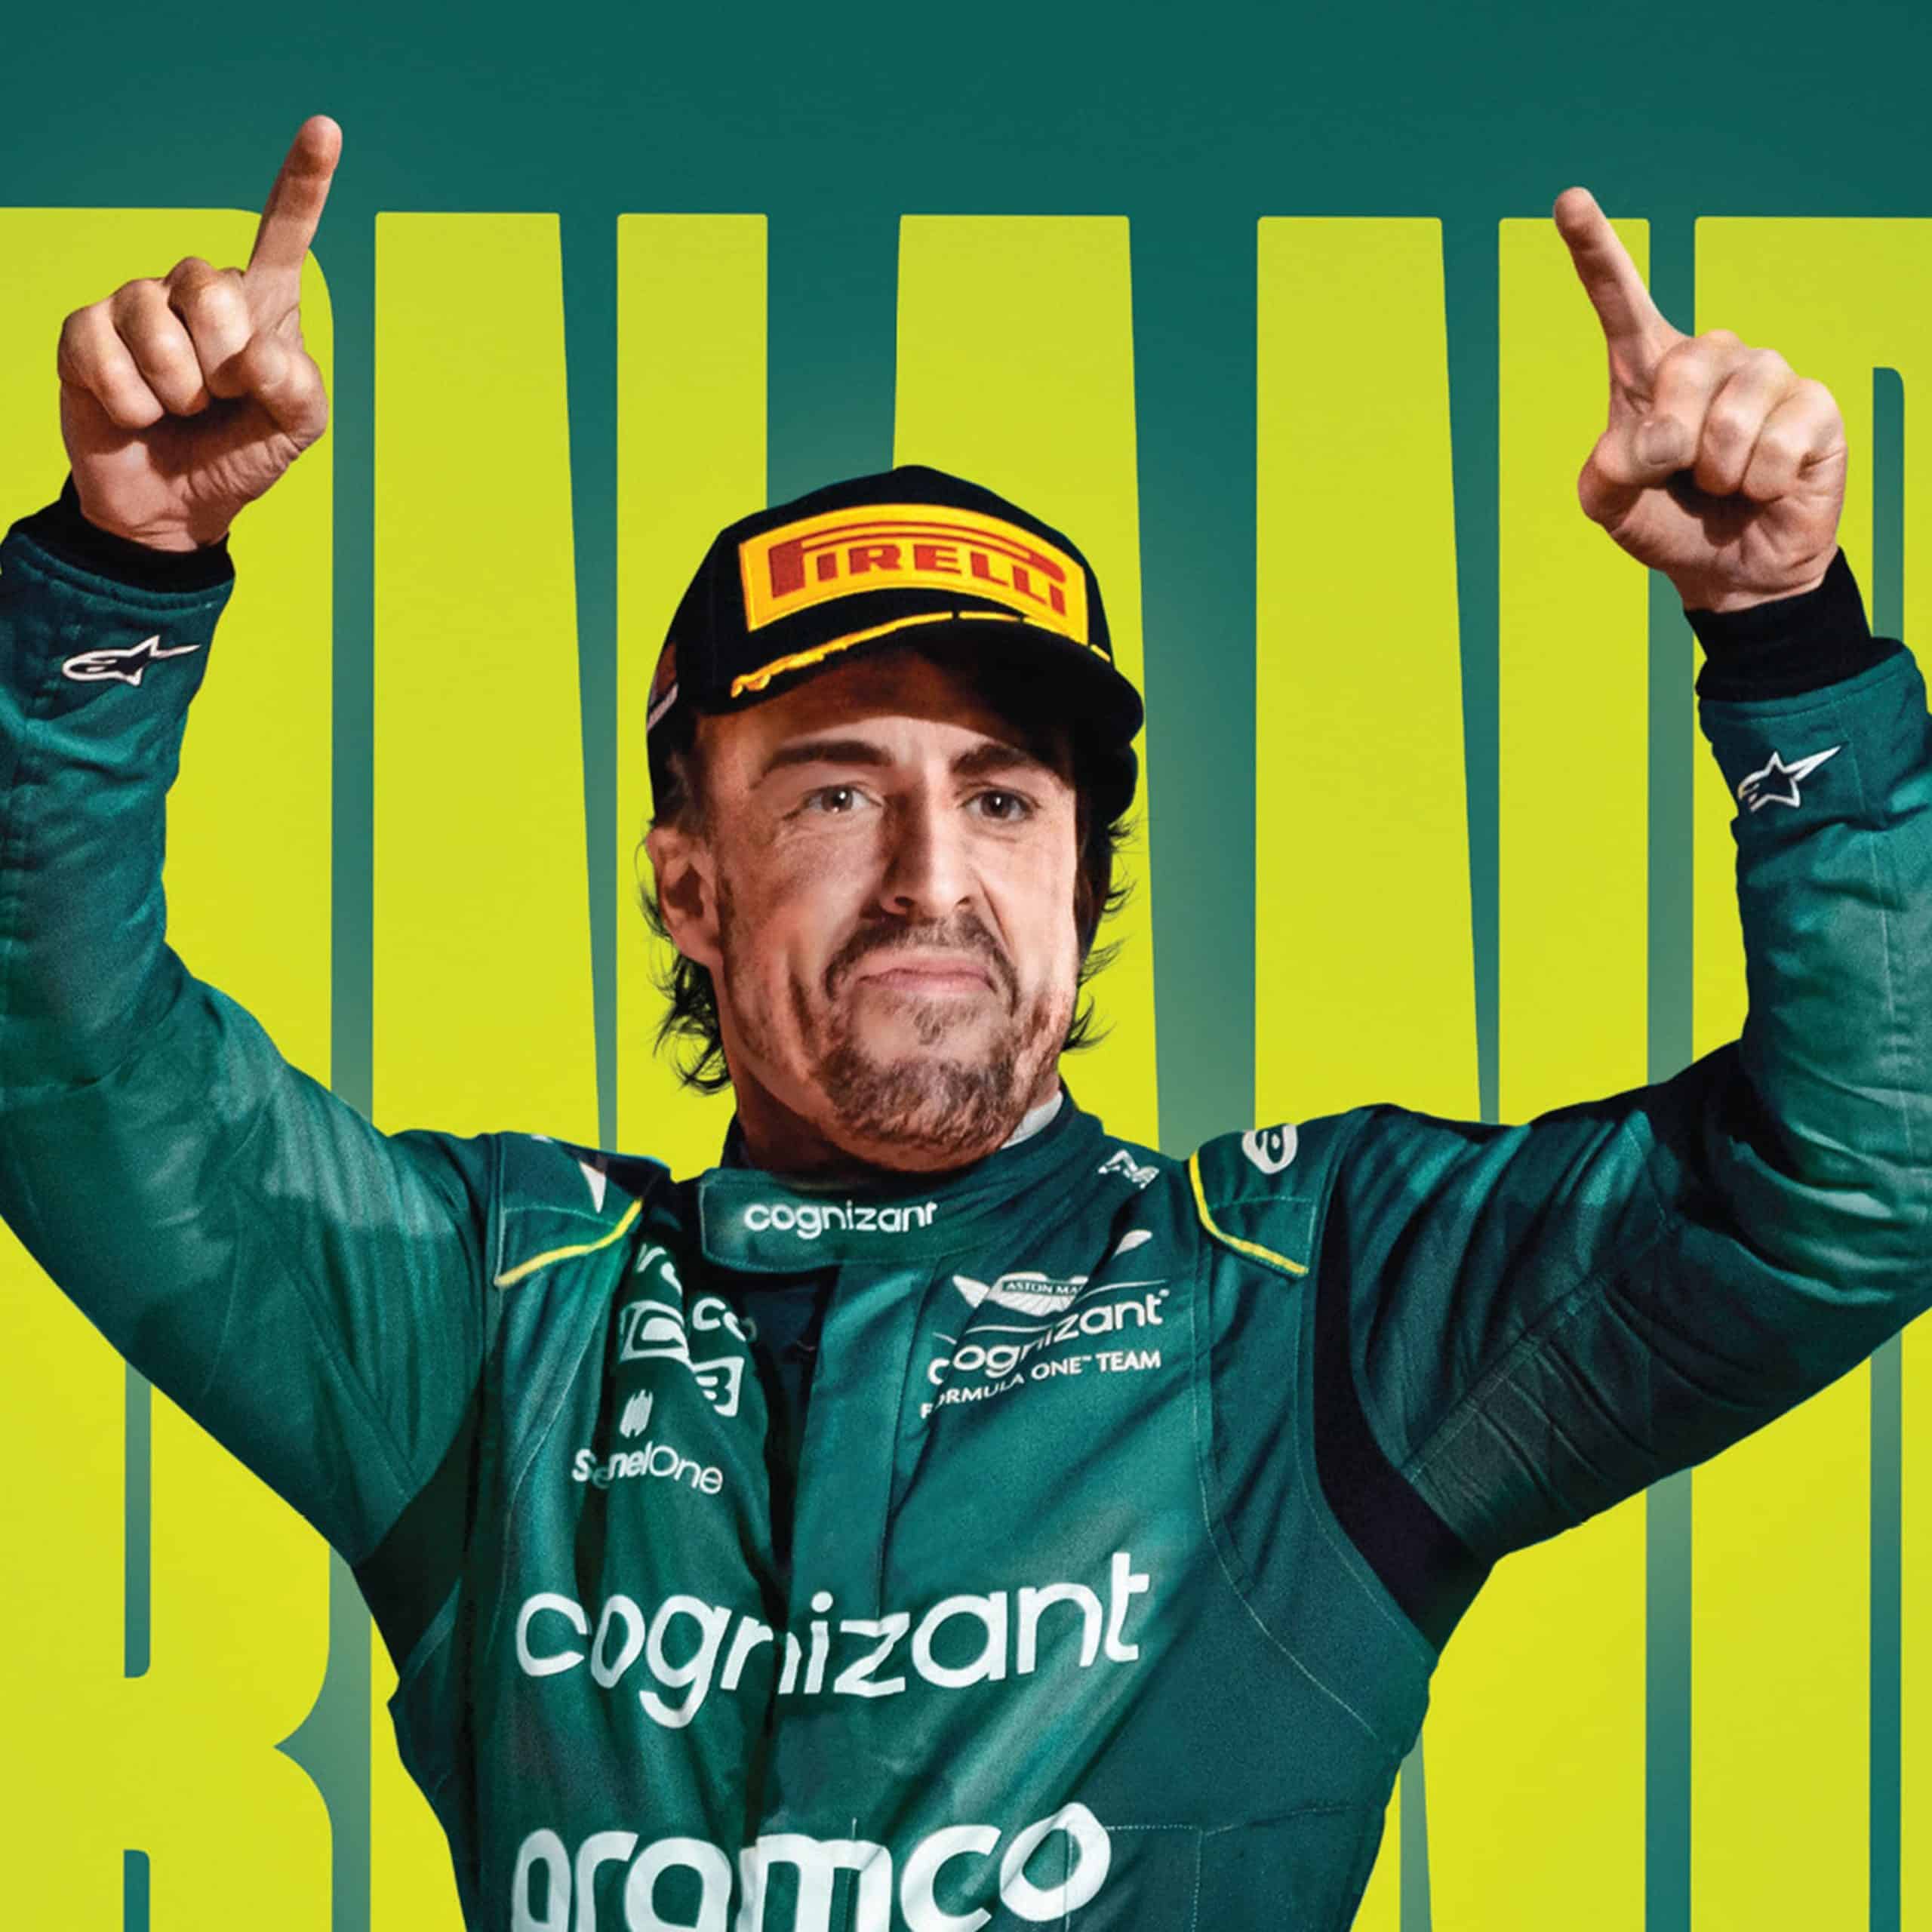 Poster Fernando Alonso 2023